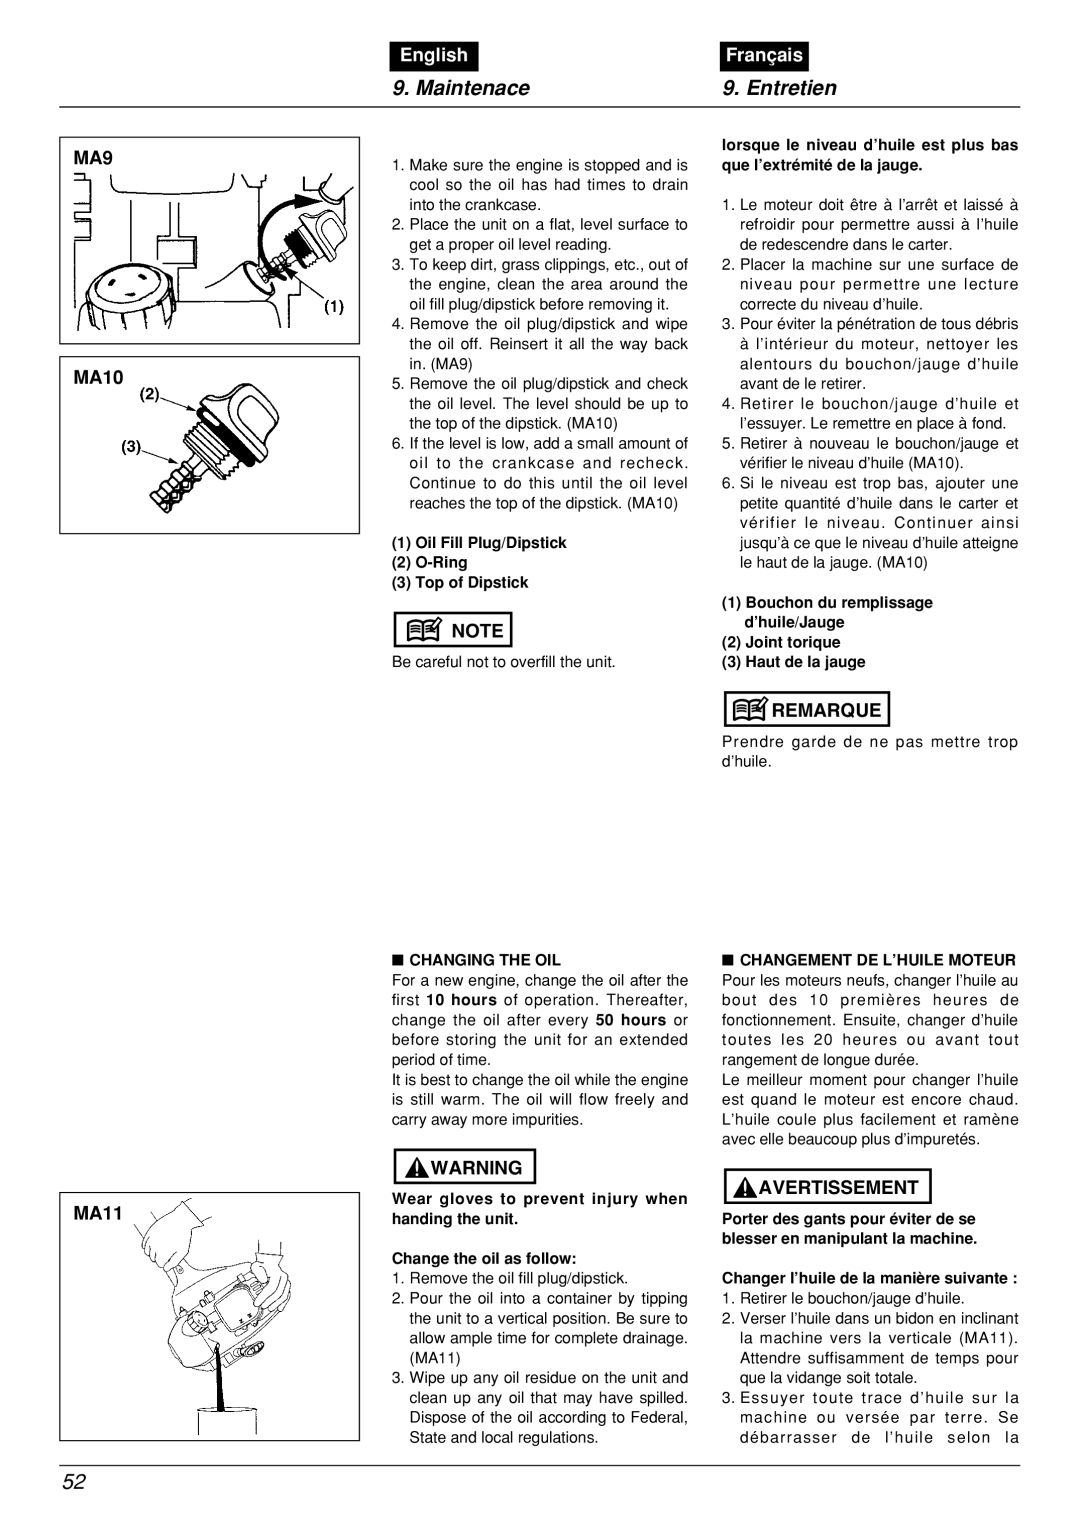 Zenoah BCX2601DL manual Maintenace, Entretien, English, Français, Oil Fill Plug/Dipstick 2 O-Ring 3 Top of Dipstick 